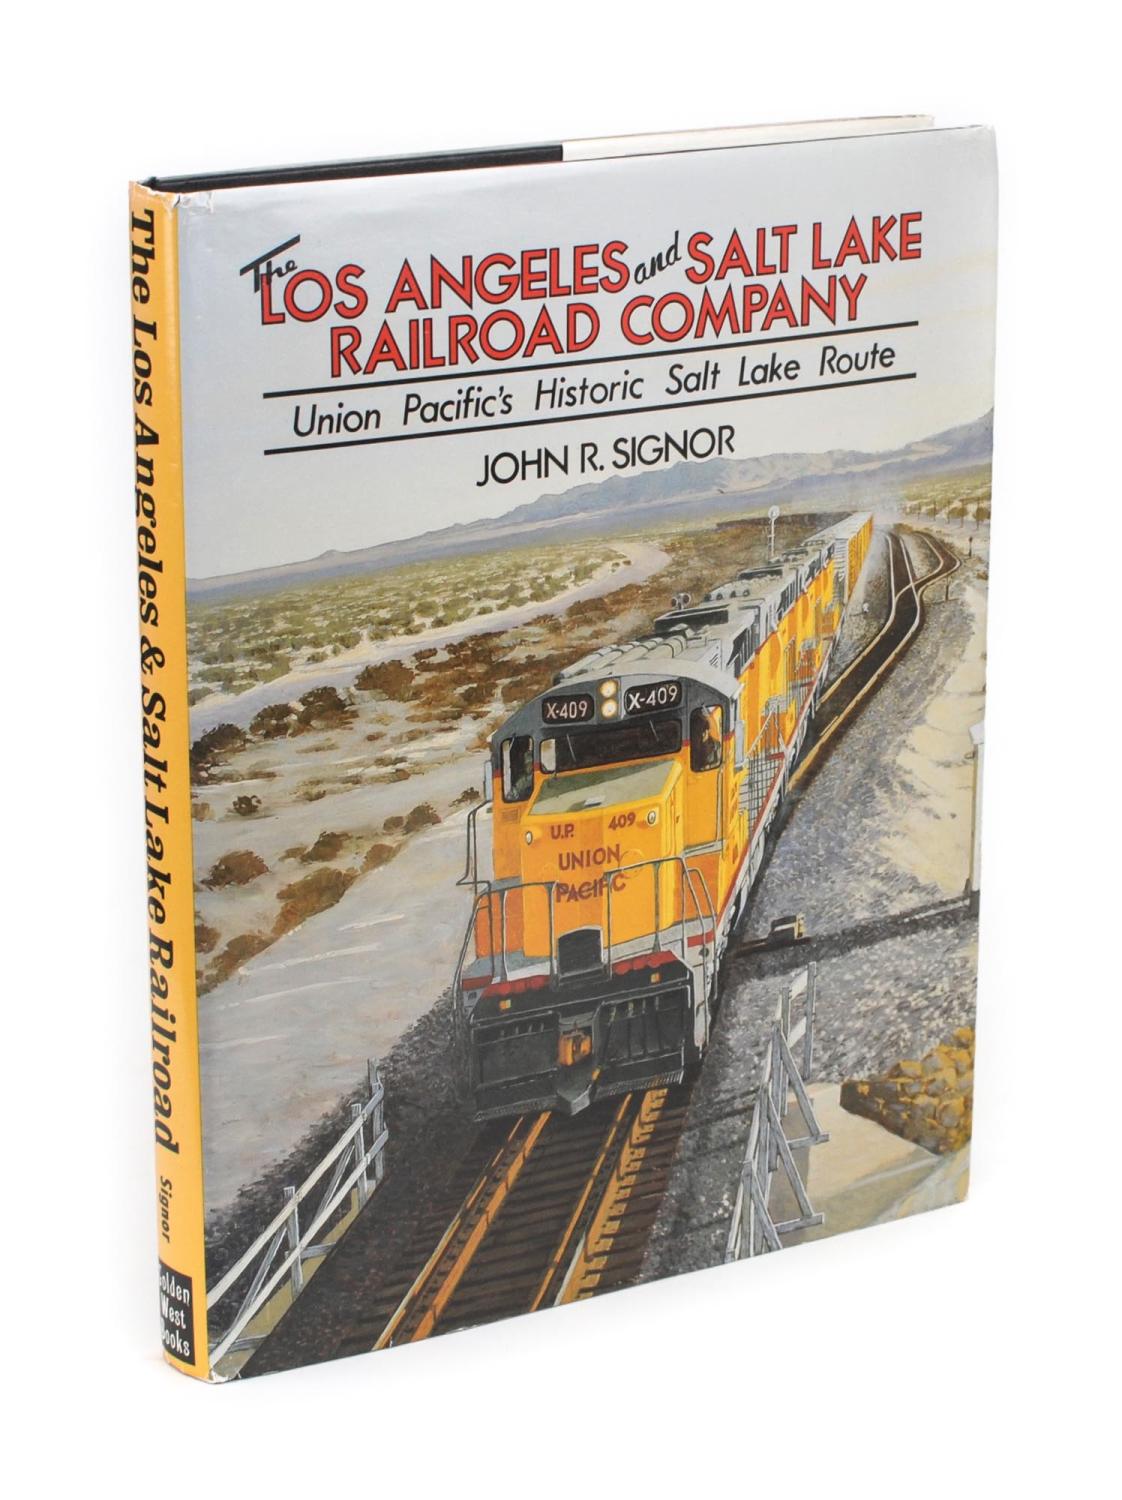 The Los Angeles and Salt Lake Railroad Company. Union Pacific's Historic Salt Lake Route - SIGNOR, John R.